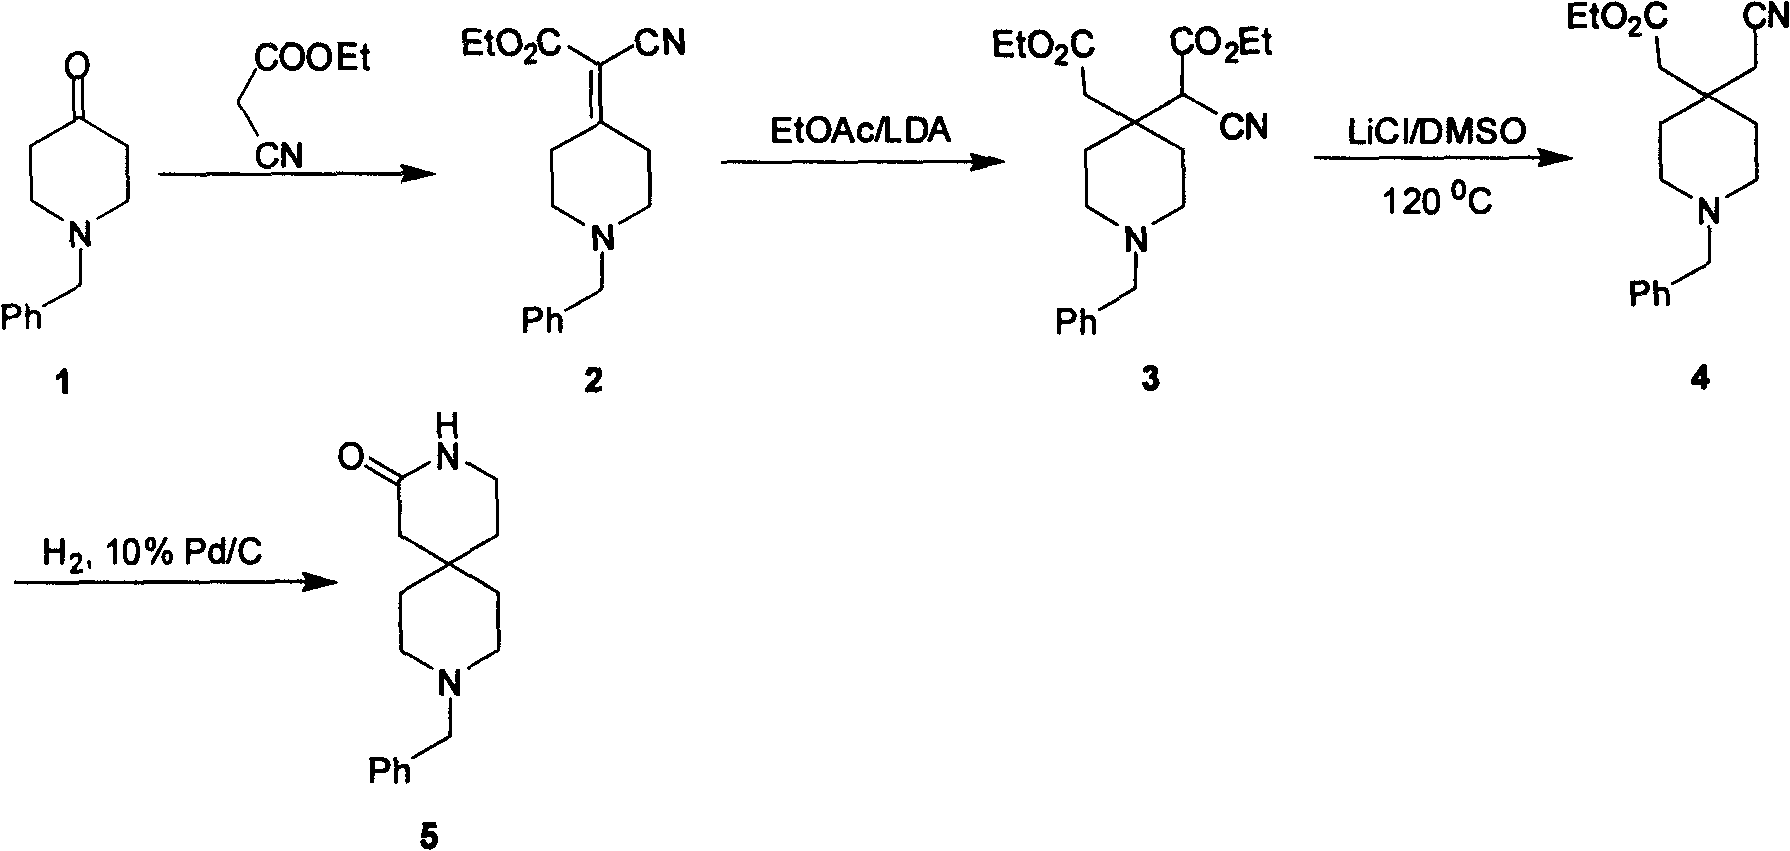 Method for synthesizing 3,9-diaza-2-oxo-spiro[5.5] undecane template compounds